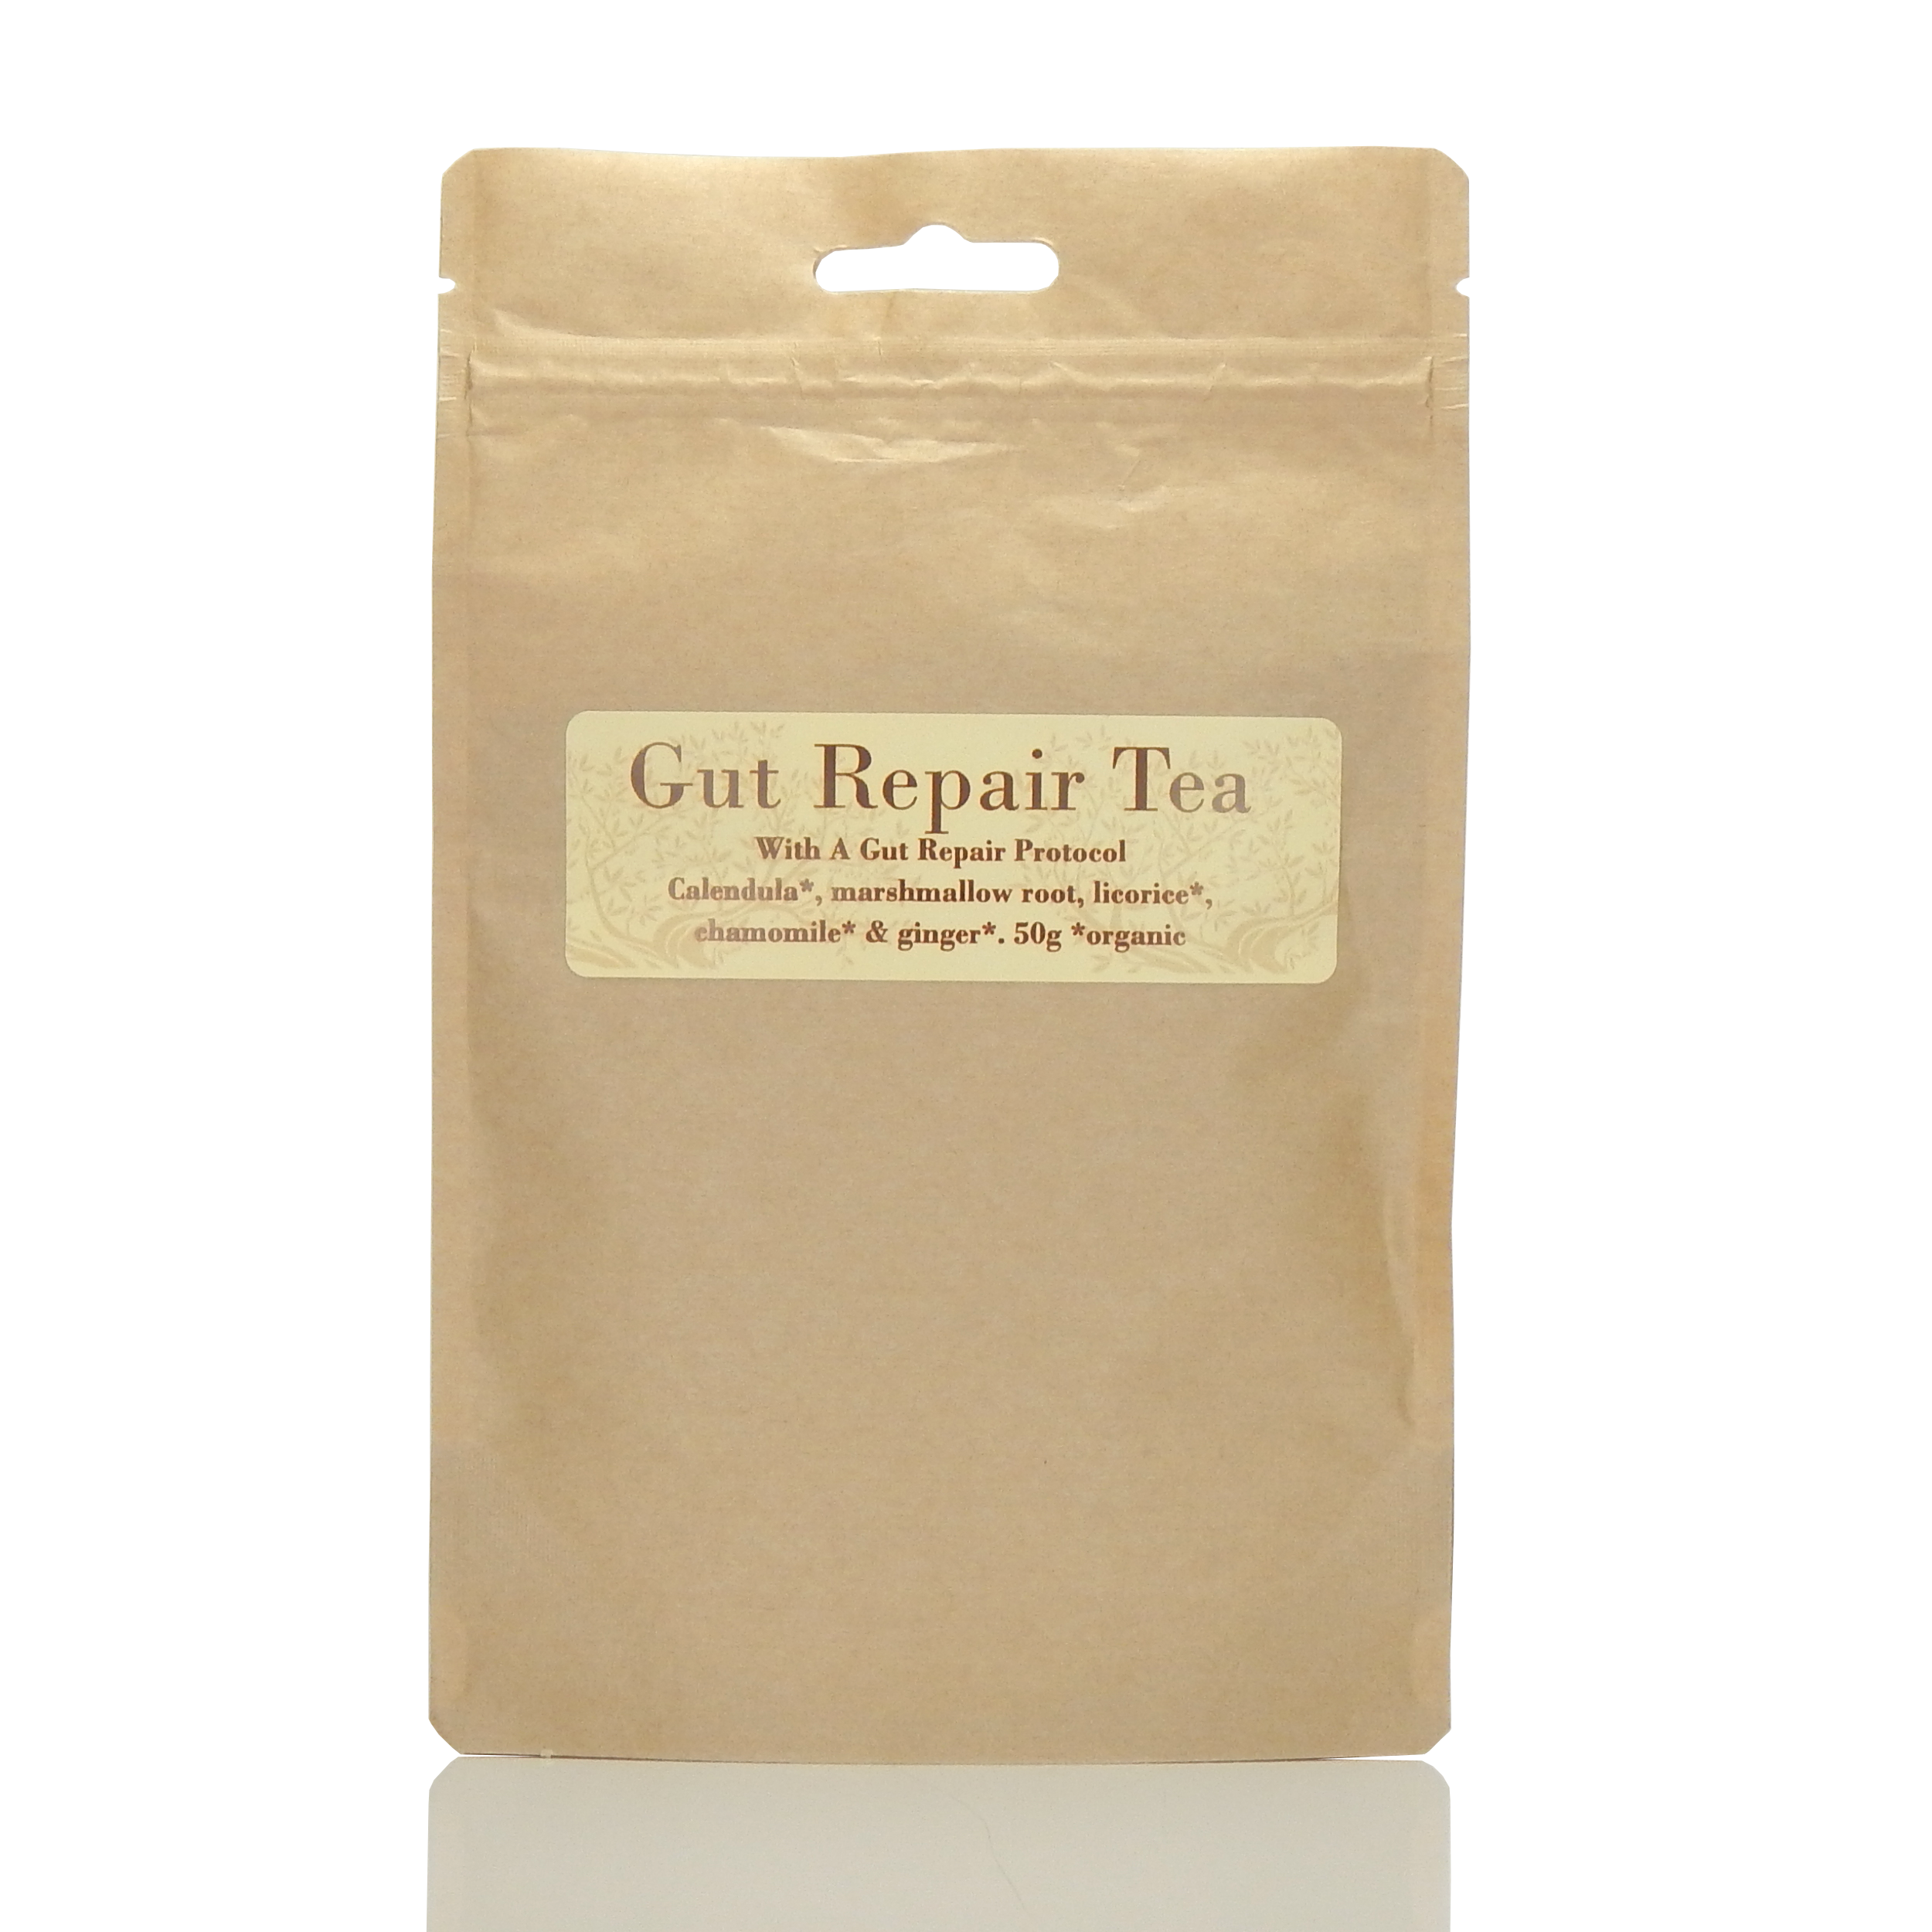 Gut Repair Tea Plus Gut Repair Protocol Instructions